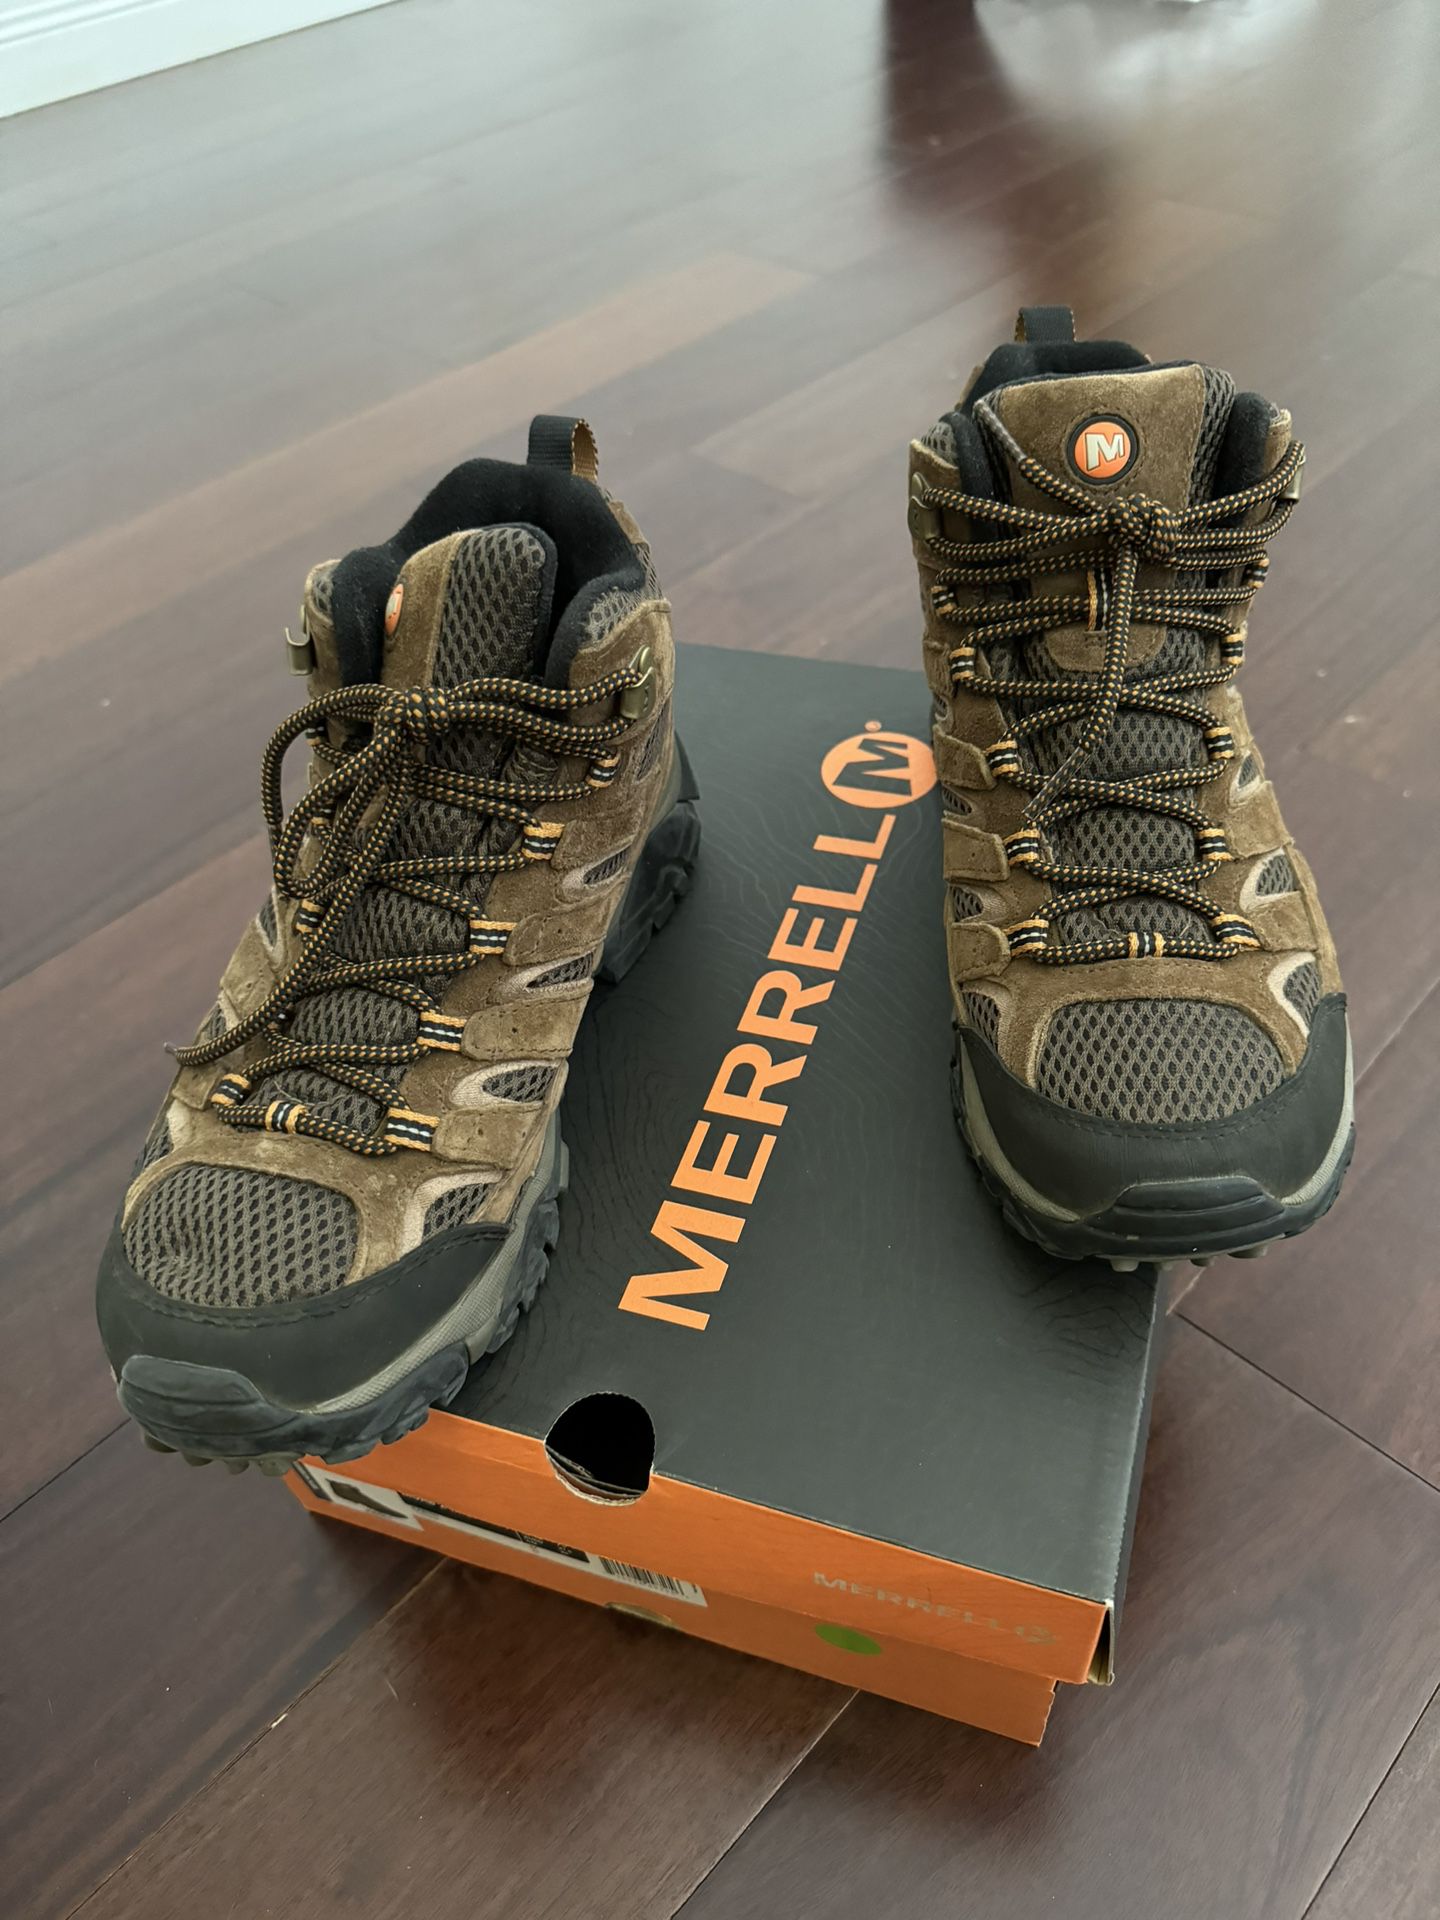 Merrell Men’s Hiking Boots